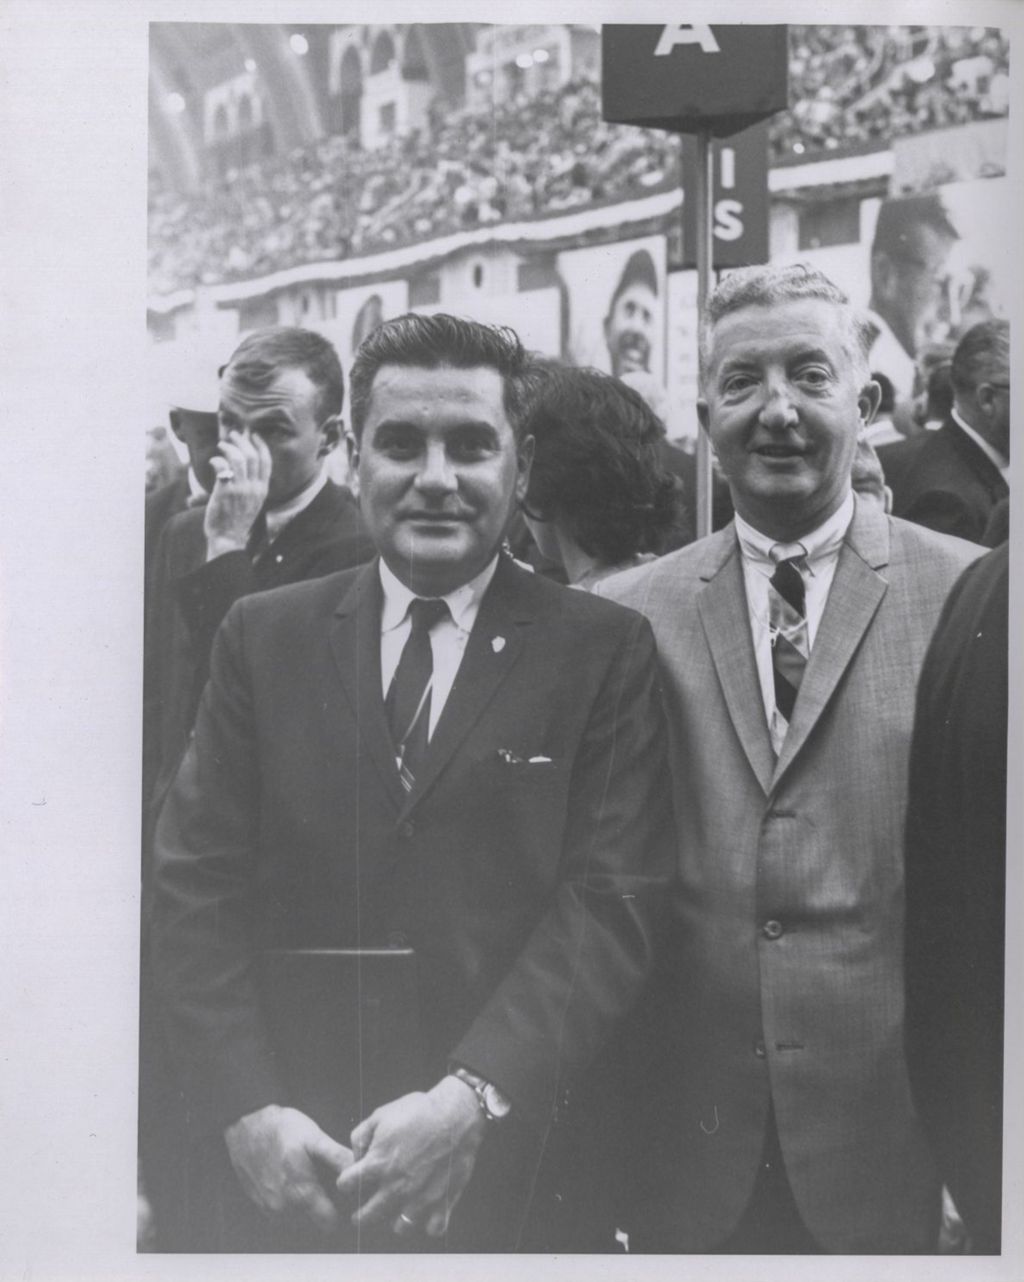 Floor delegates at the 1964 Democratic Convention